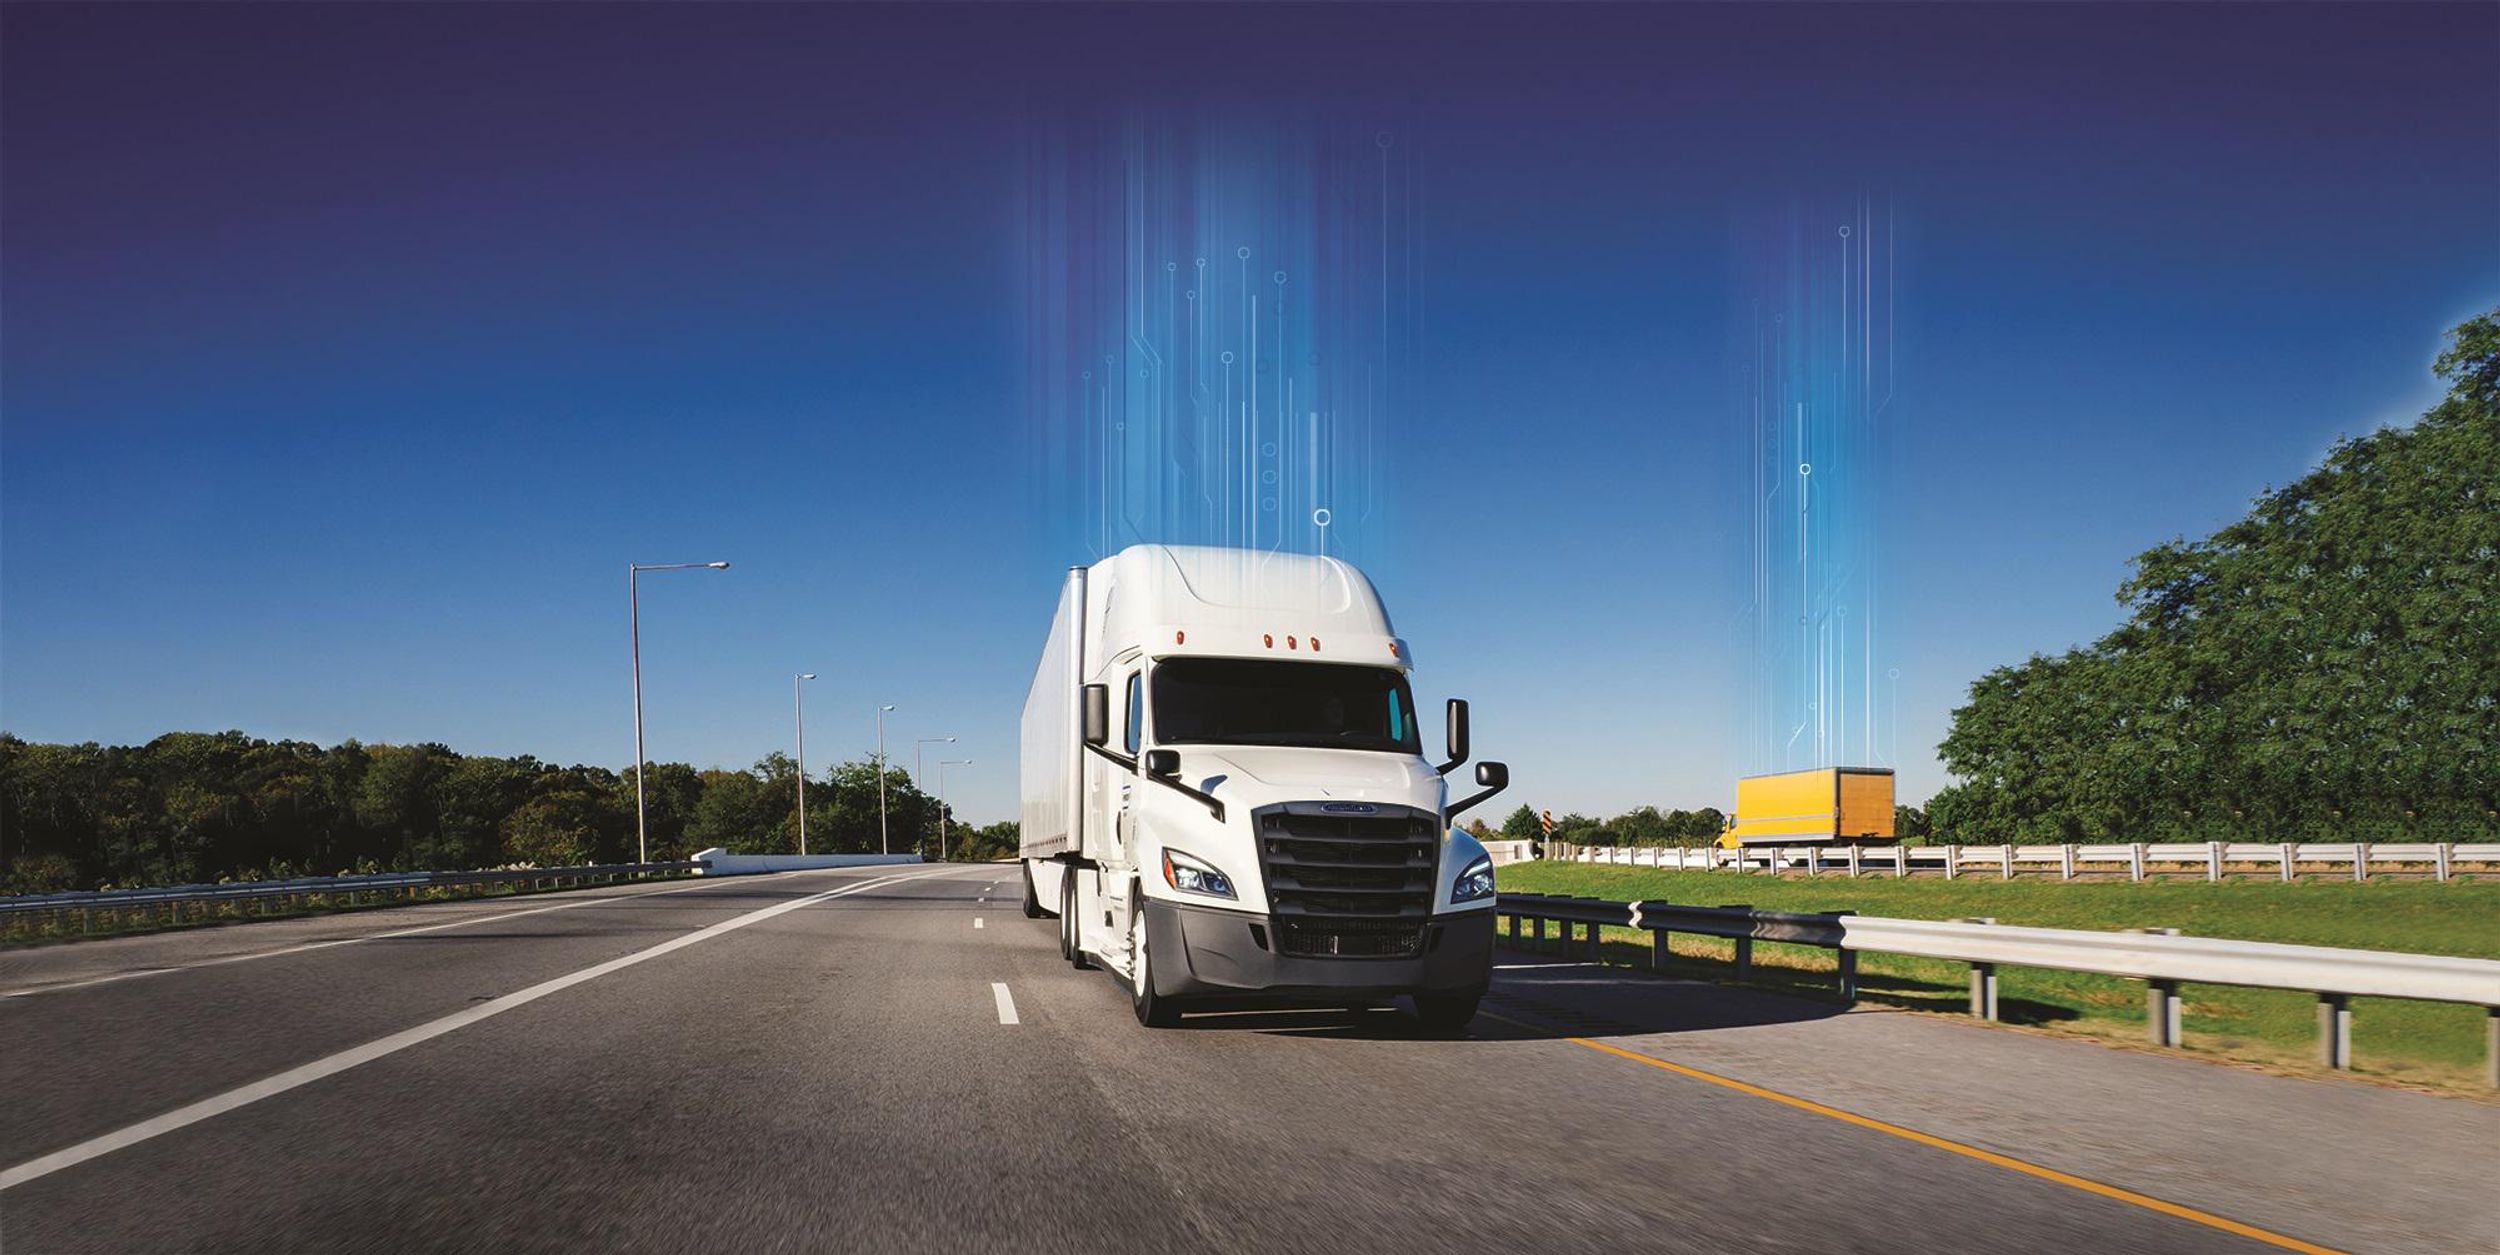 Penske Truck Leasing has joined the Torc Robotics Autonomous Advisory Council (TAAC).